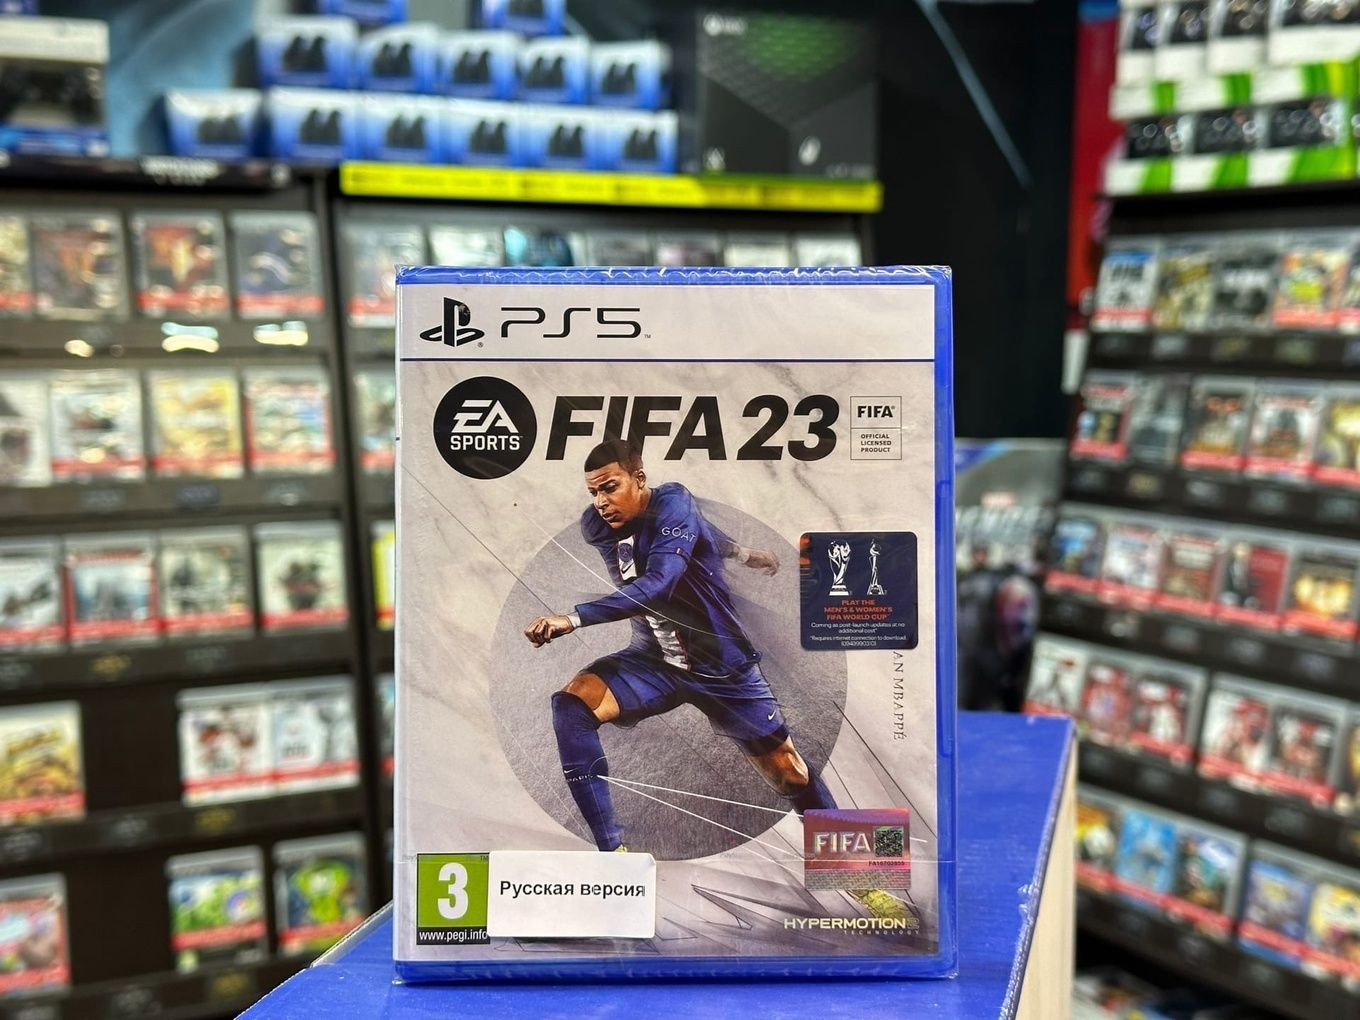 Фифа хабаровск. FIFA 23 ps5. Фото карточек ФИФА 23. FIFA 23 Premium Edition ps5.